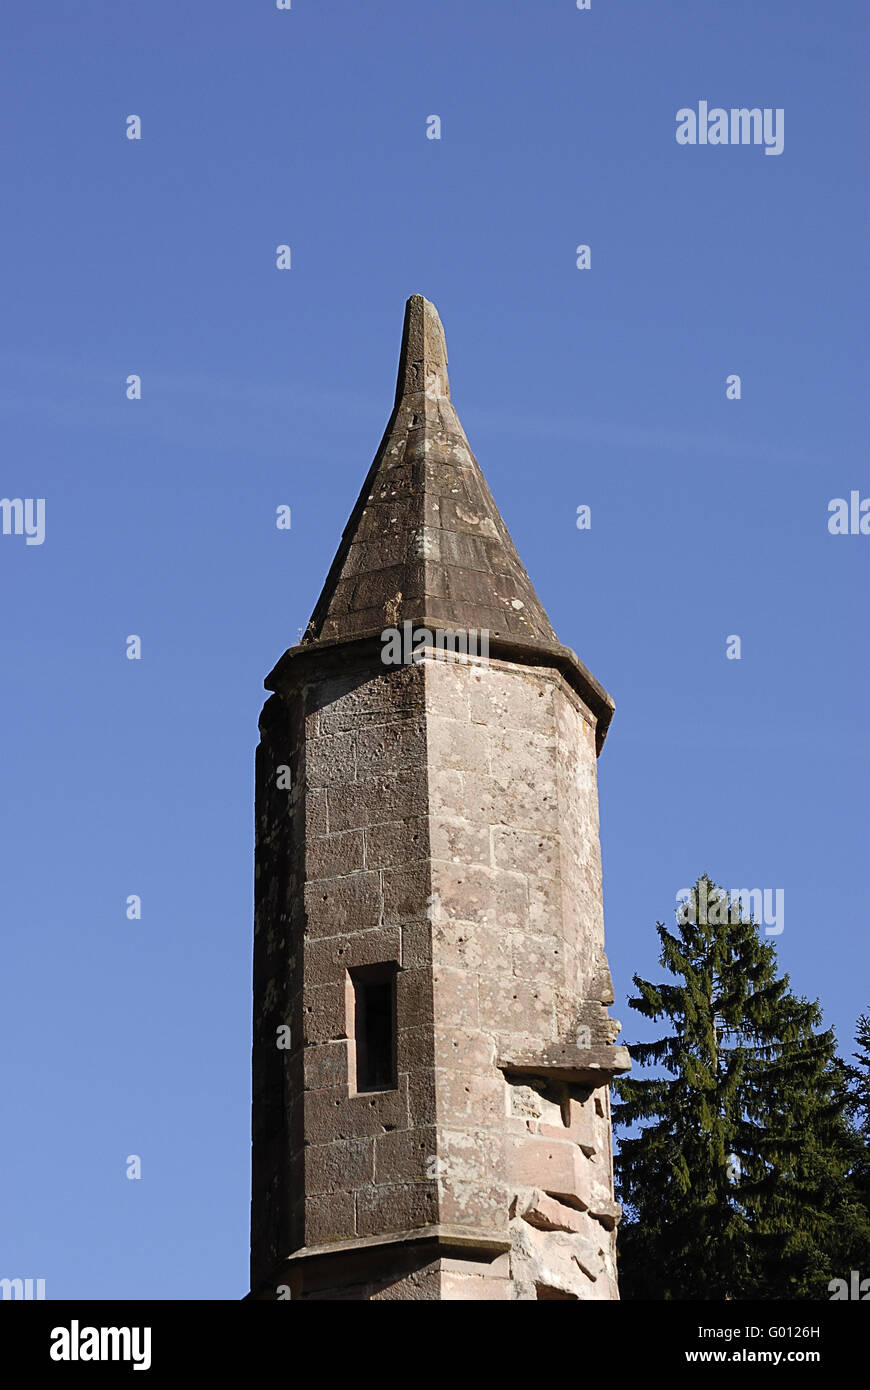 Spitzturm-torre appuntita Foto Stock